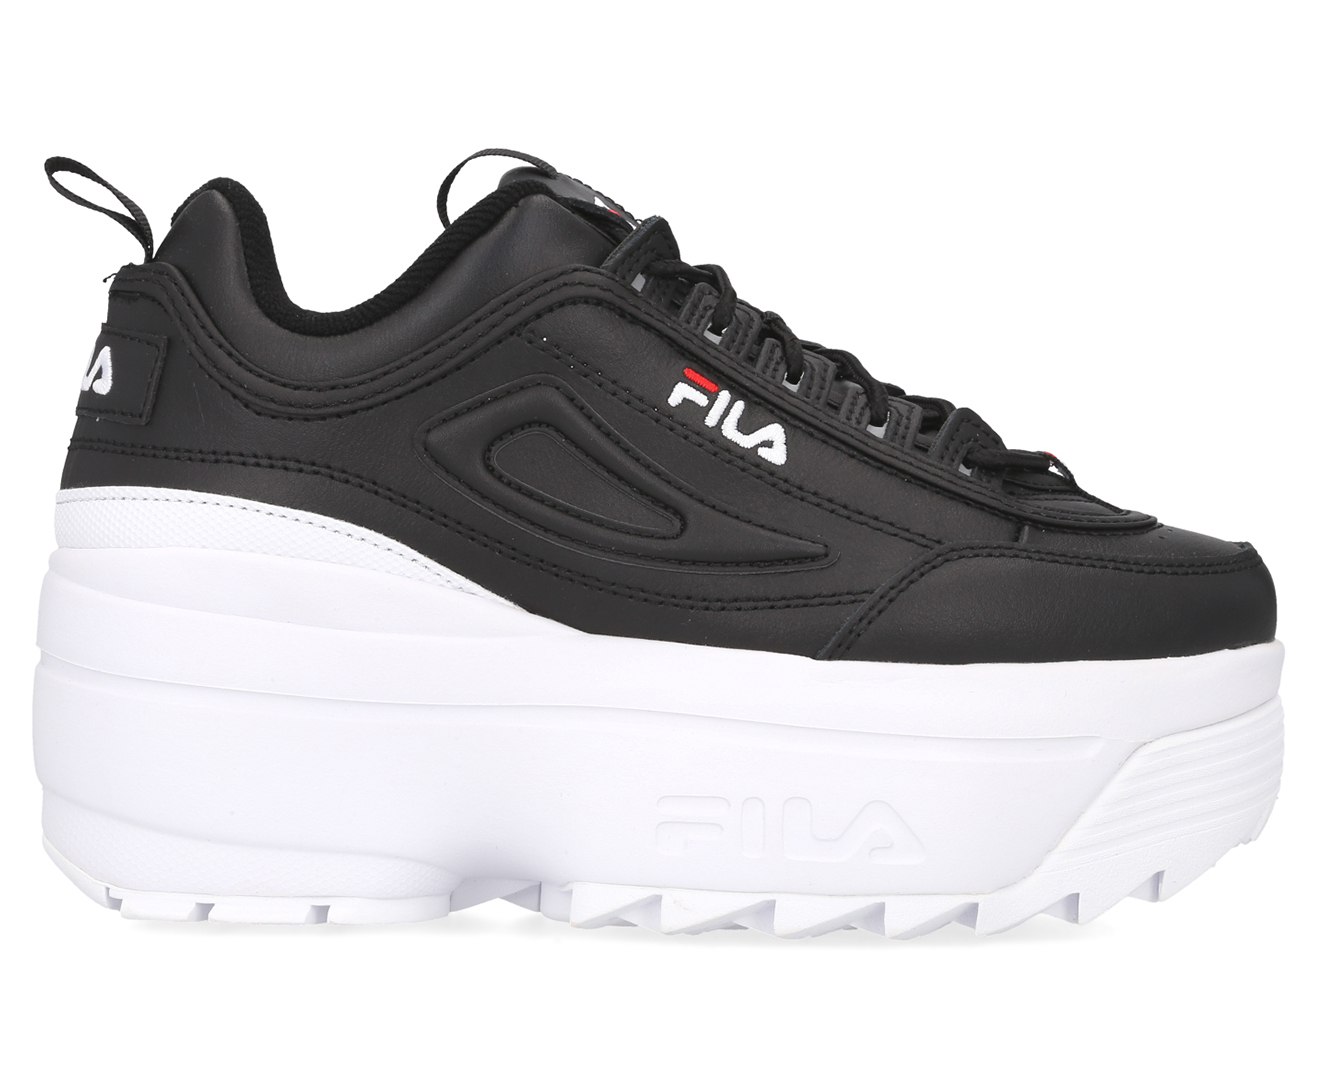 Fila Women's Disruptor 2 Wedge Sneakers - Black/Red/White | Www.catch ...